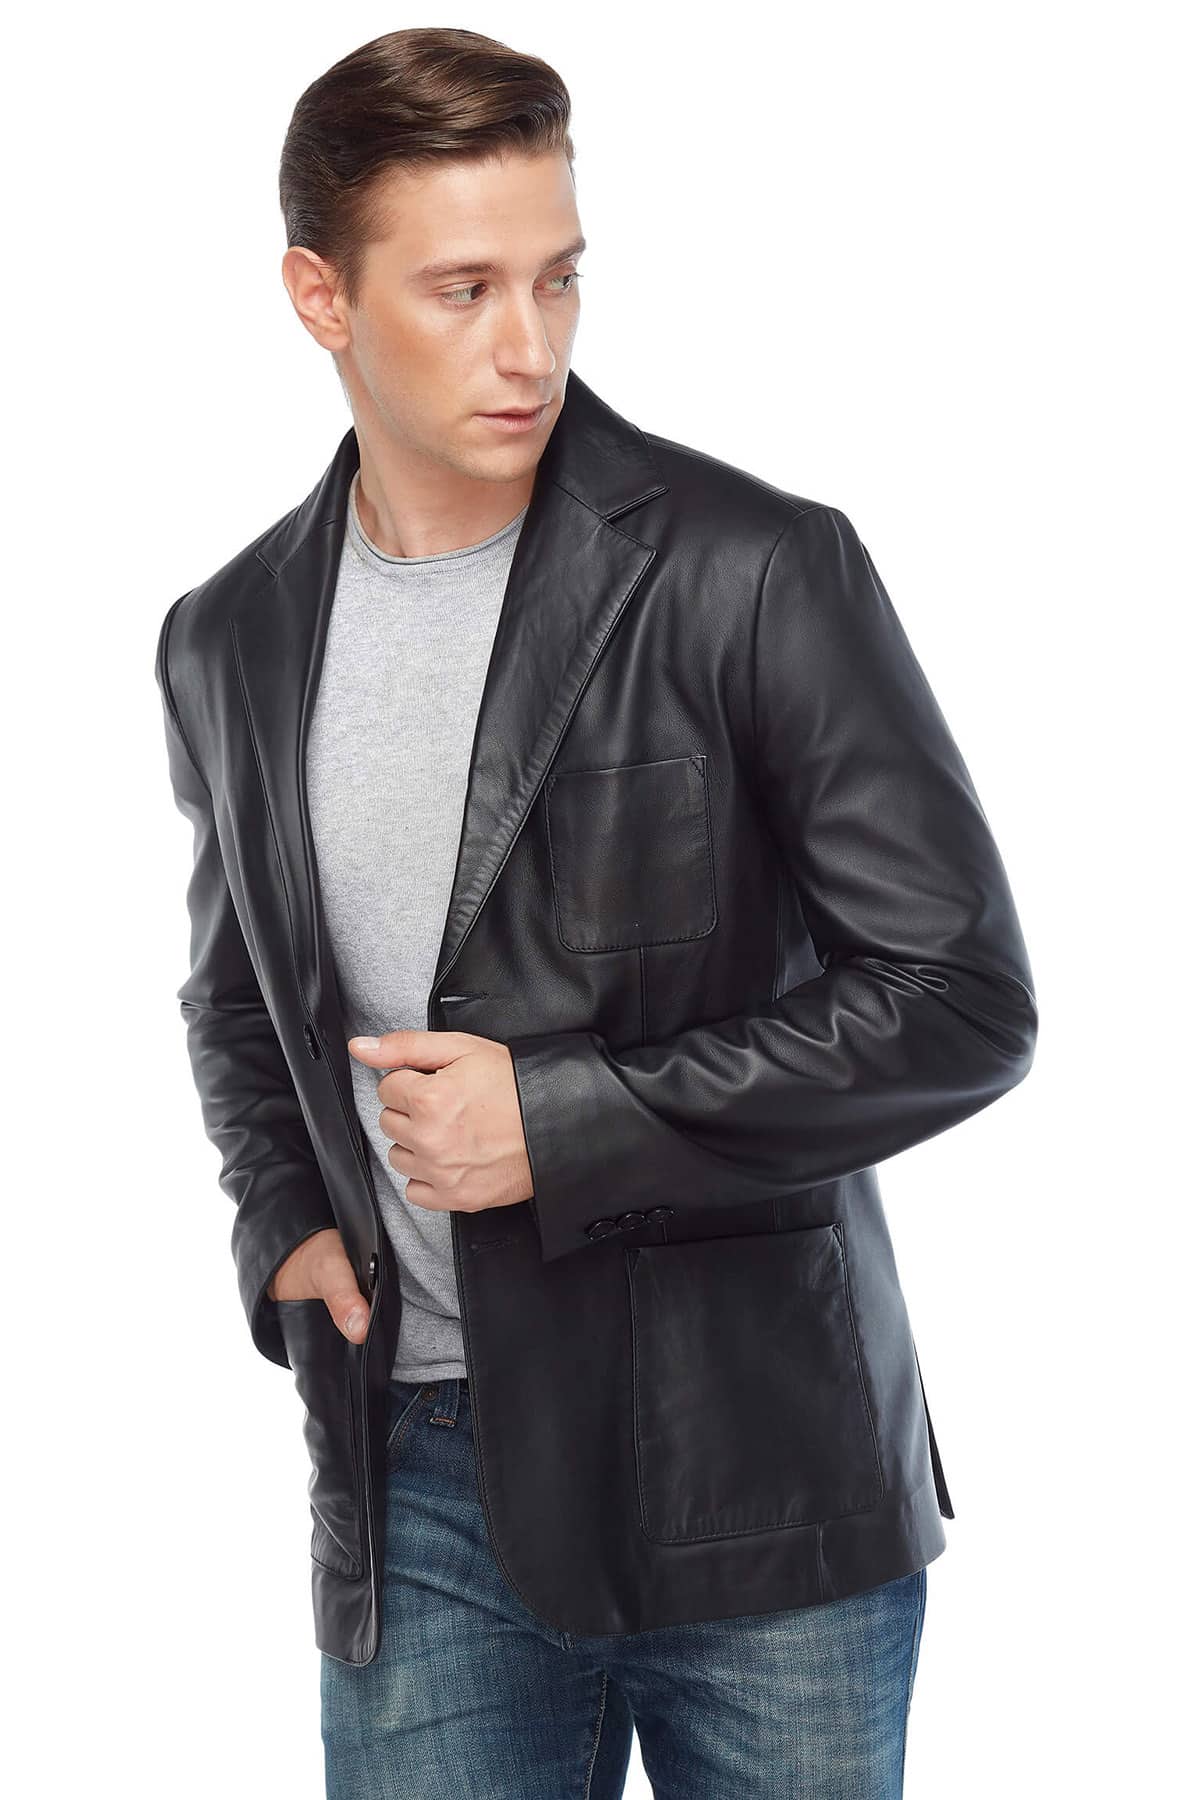 Stephen James Black Blazer Leather Jacket Pose